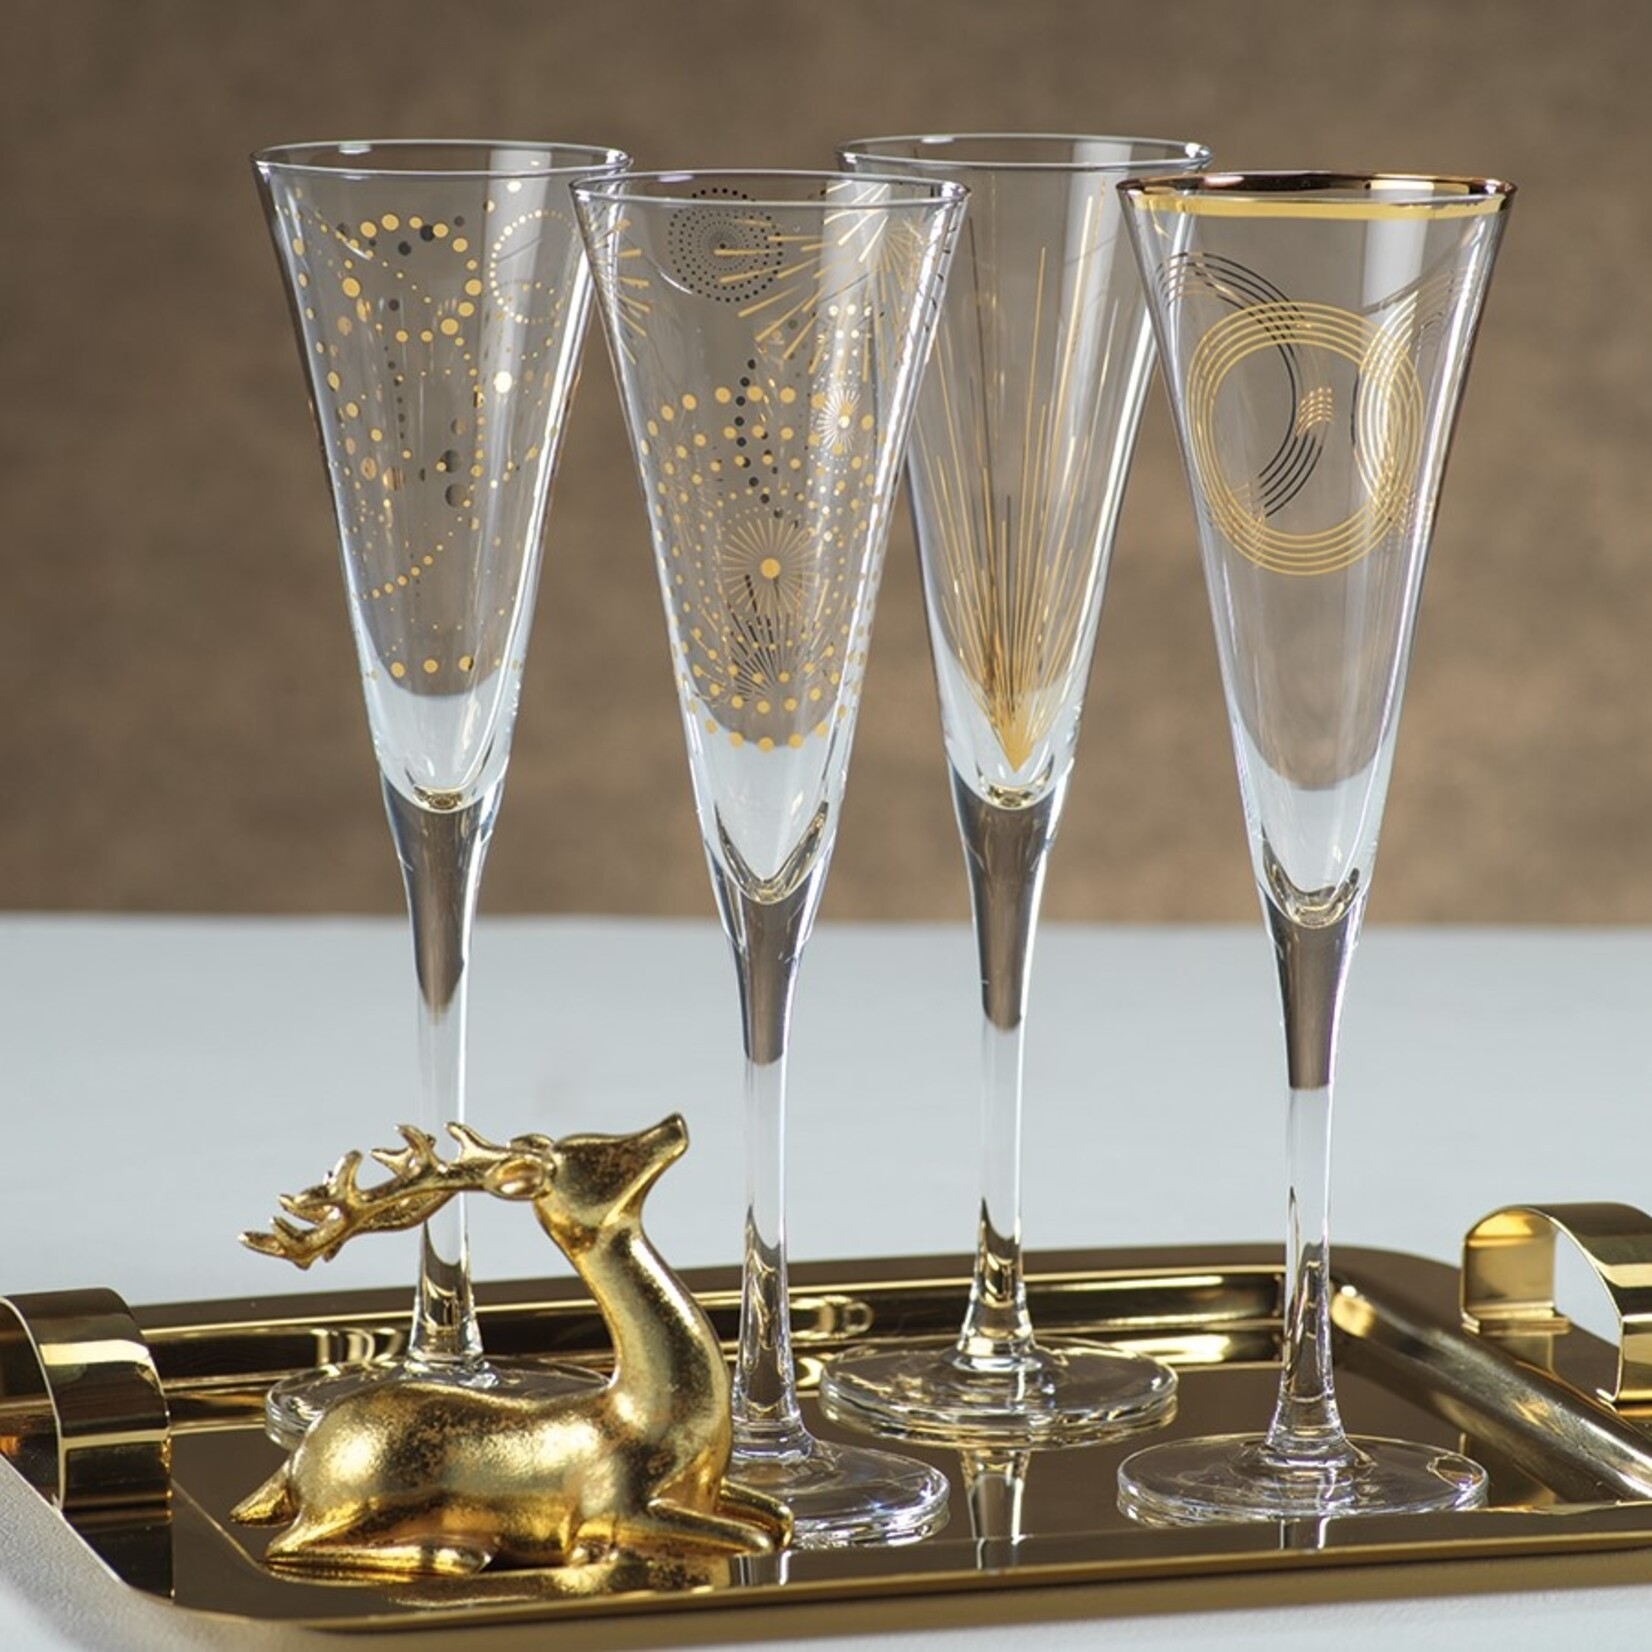 Zodax Celebration Champagne Flute Glass